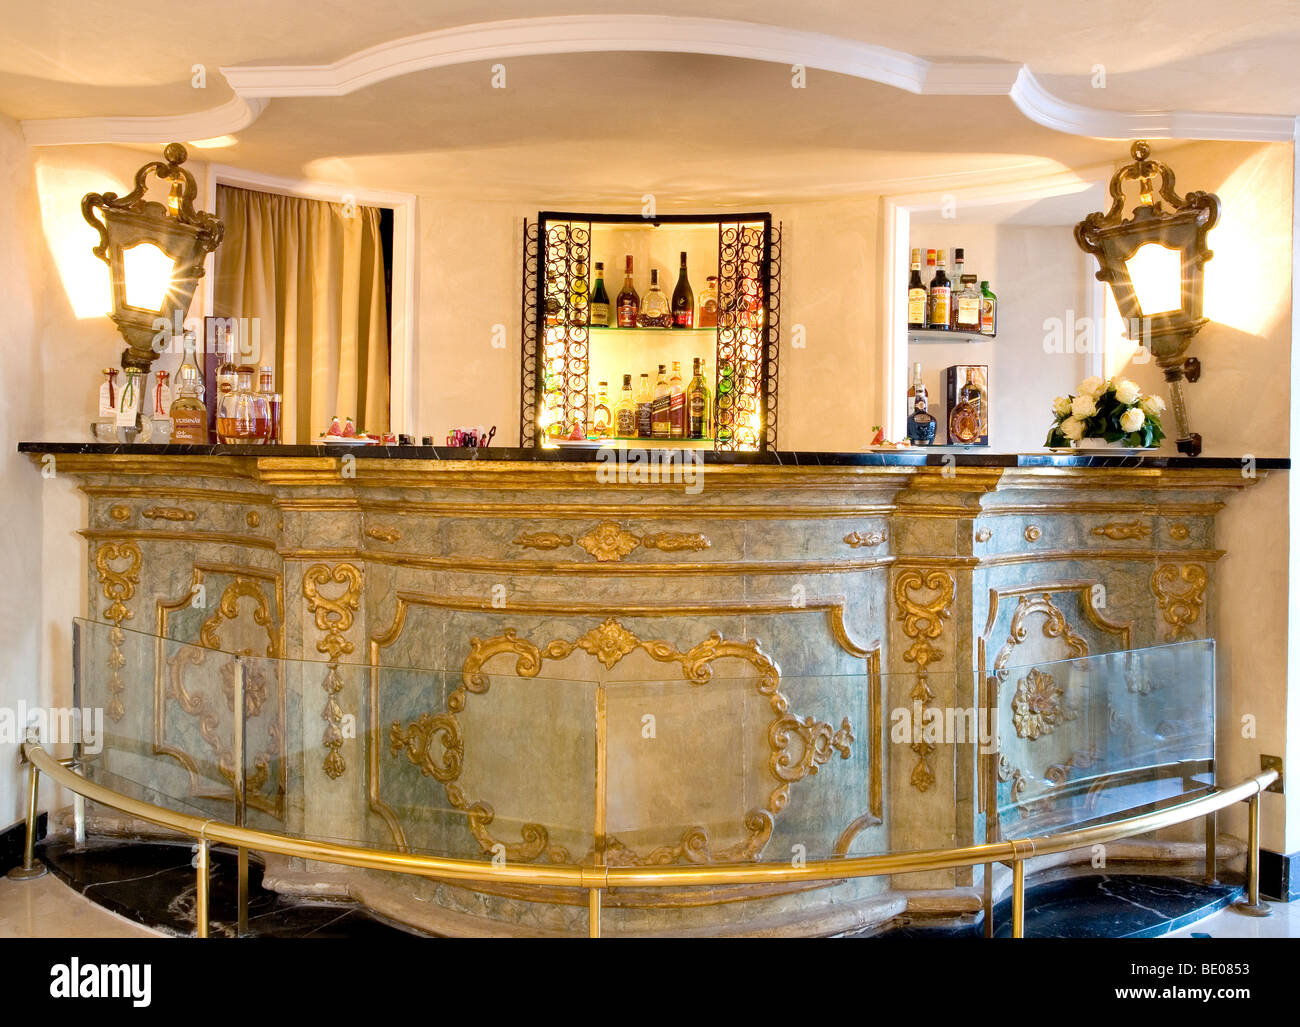 The 5 star Hotel Punta Tragara's Famous Baroque Style Bar on the Isle of Capri, Italy Stock Photo